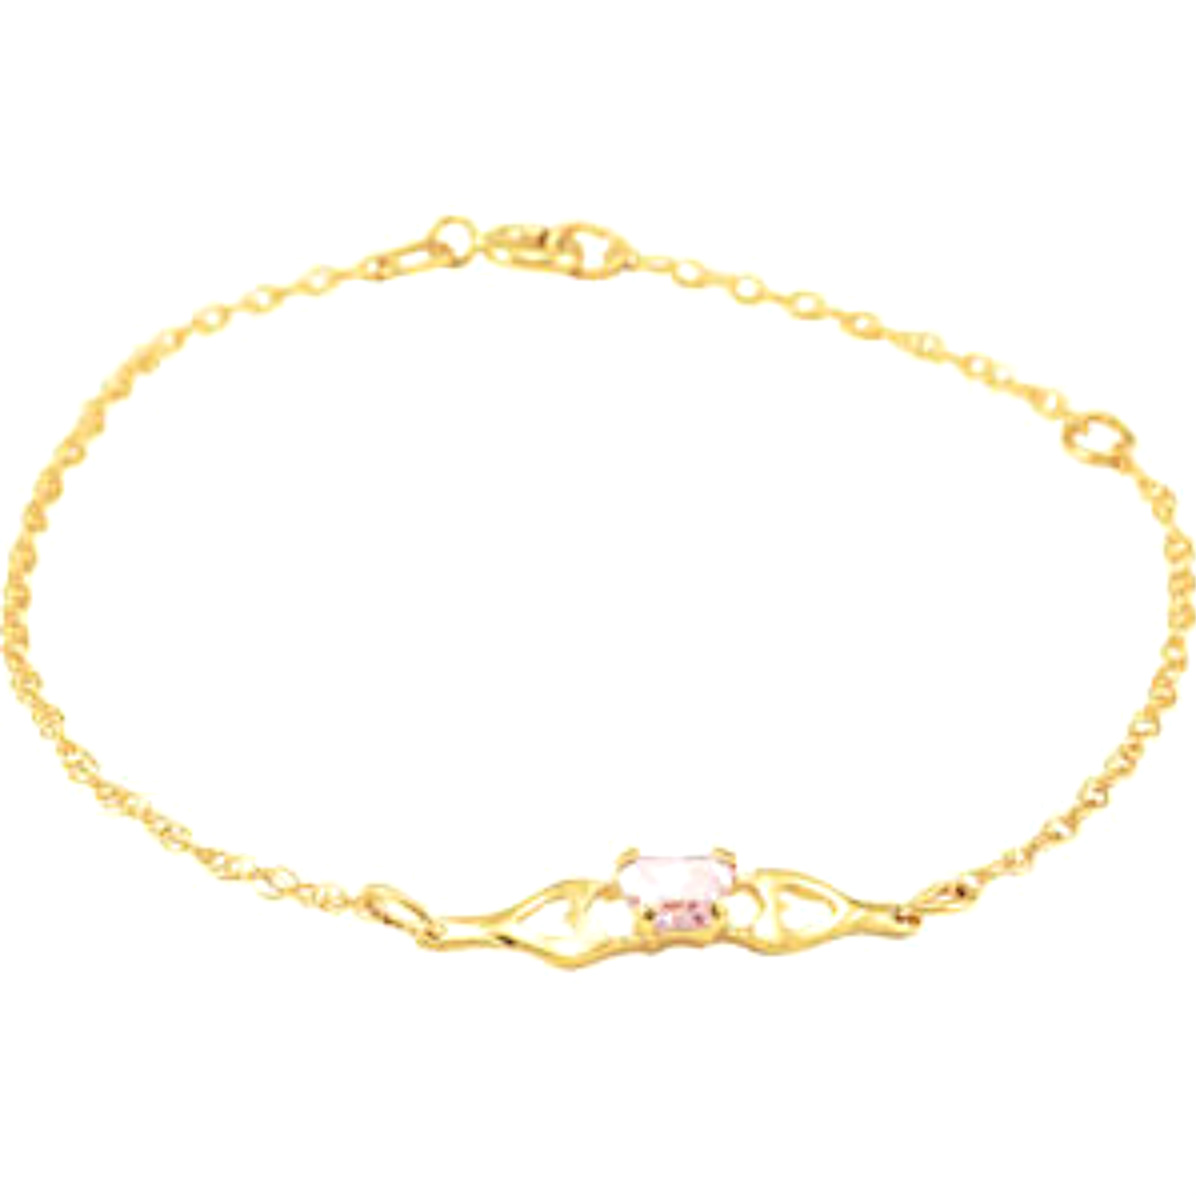 Girl's 'Bfly' October Birthstone Bracelet in 10k Yellow Gold, 4.1"